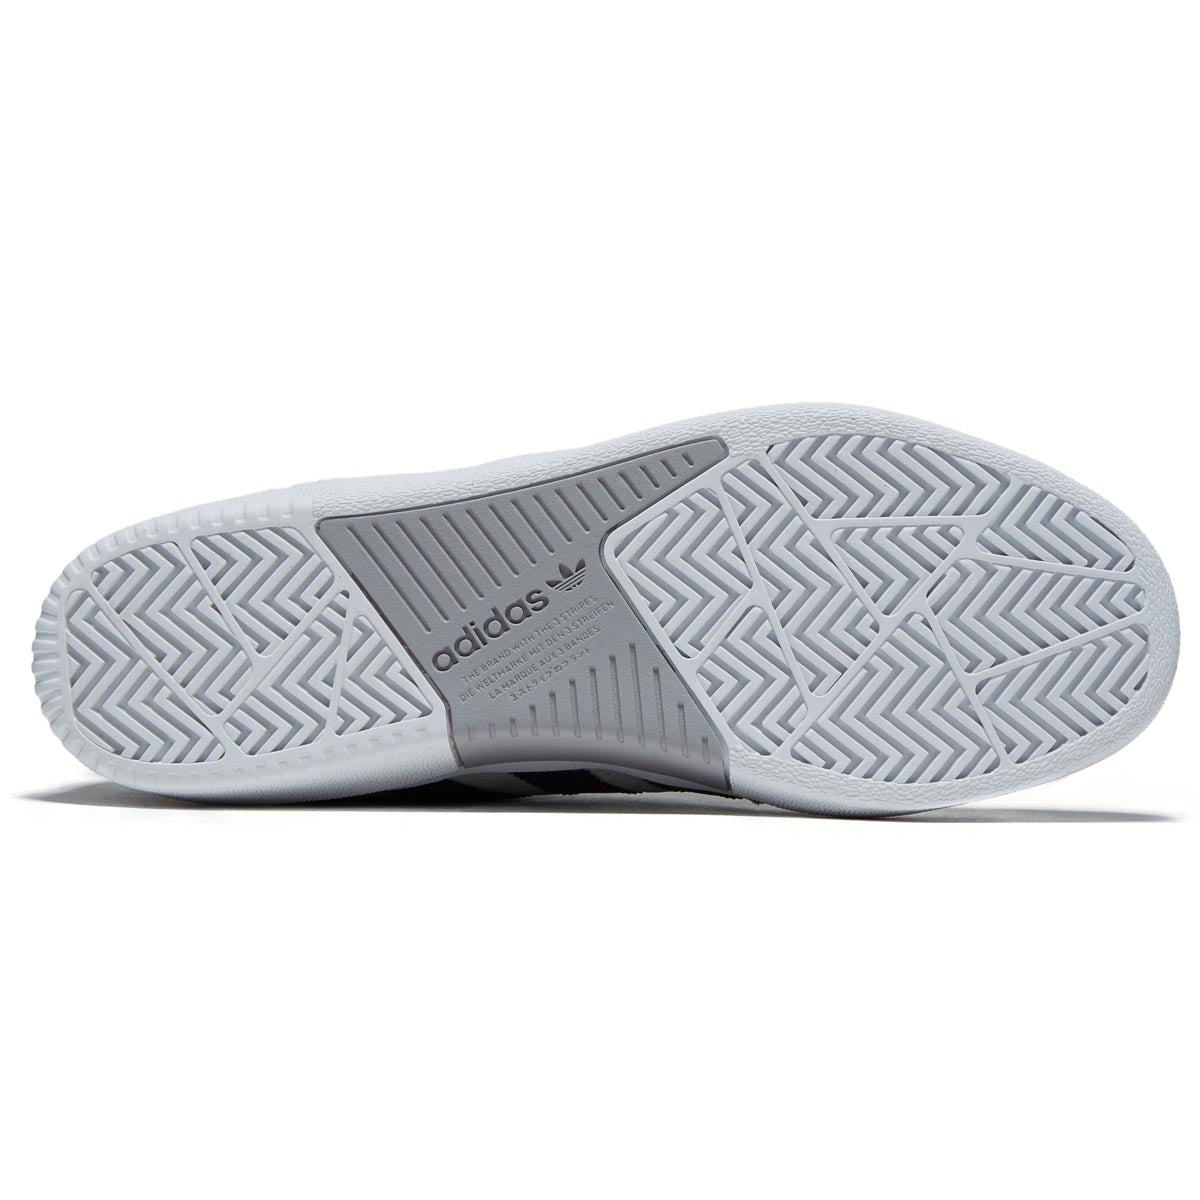 Adidas Tyshawn Shoes - Grey/Collegiate Navy/Gold Metallic image 4